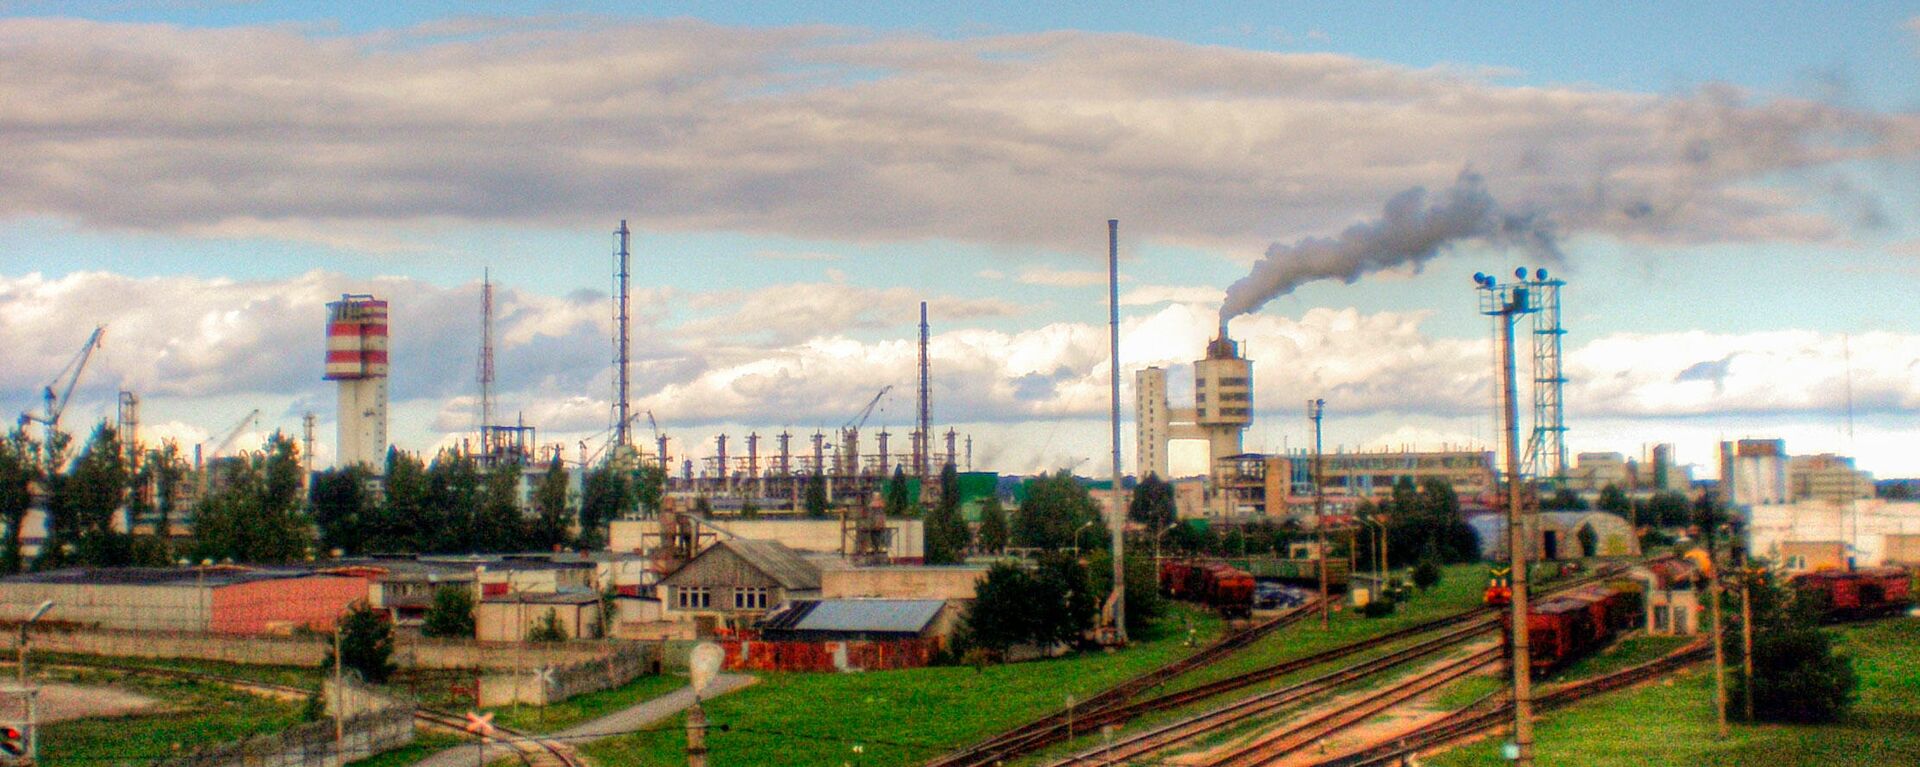 Химический завод компании Achema в городе Ионава, Литва - Sputnik Латвия, 1920, 04.02.2022